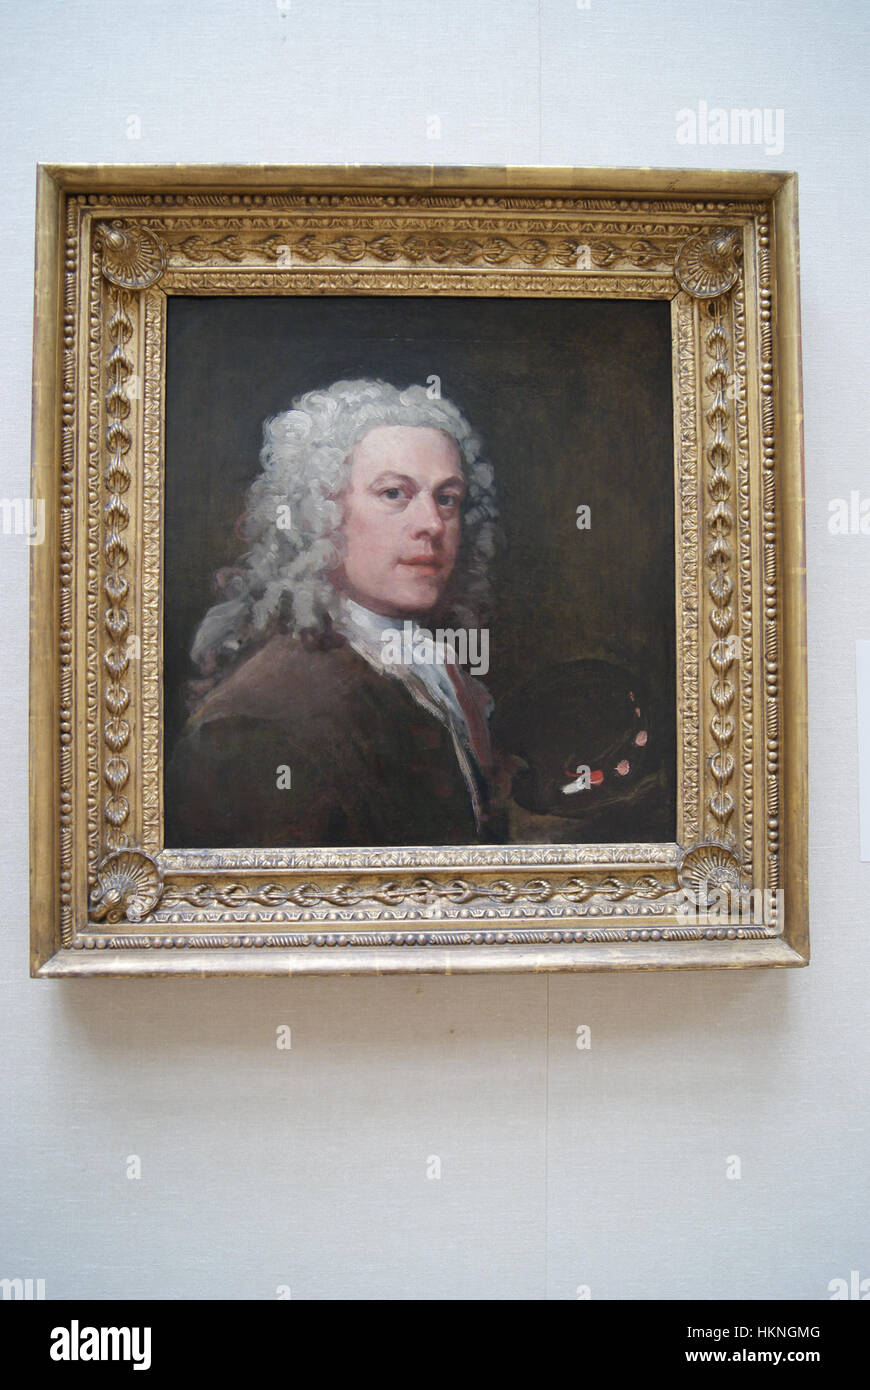 William Hogarth, Self-portrait (c. 1735, Yale Center for British Art) Stock Photo